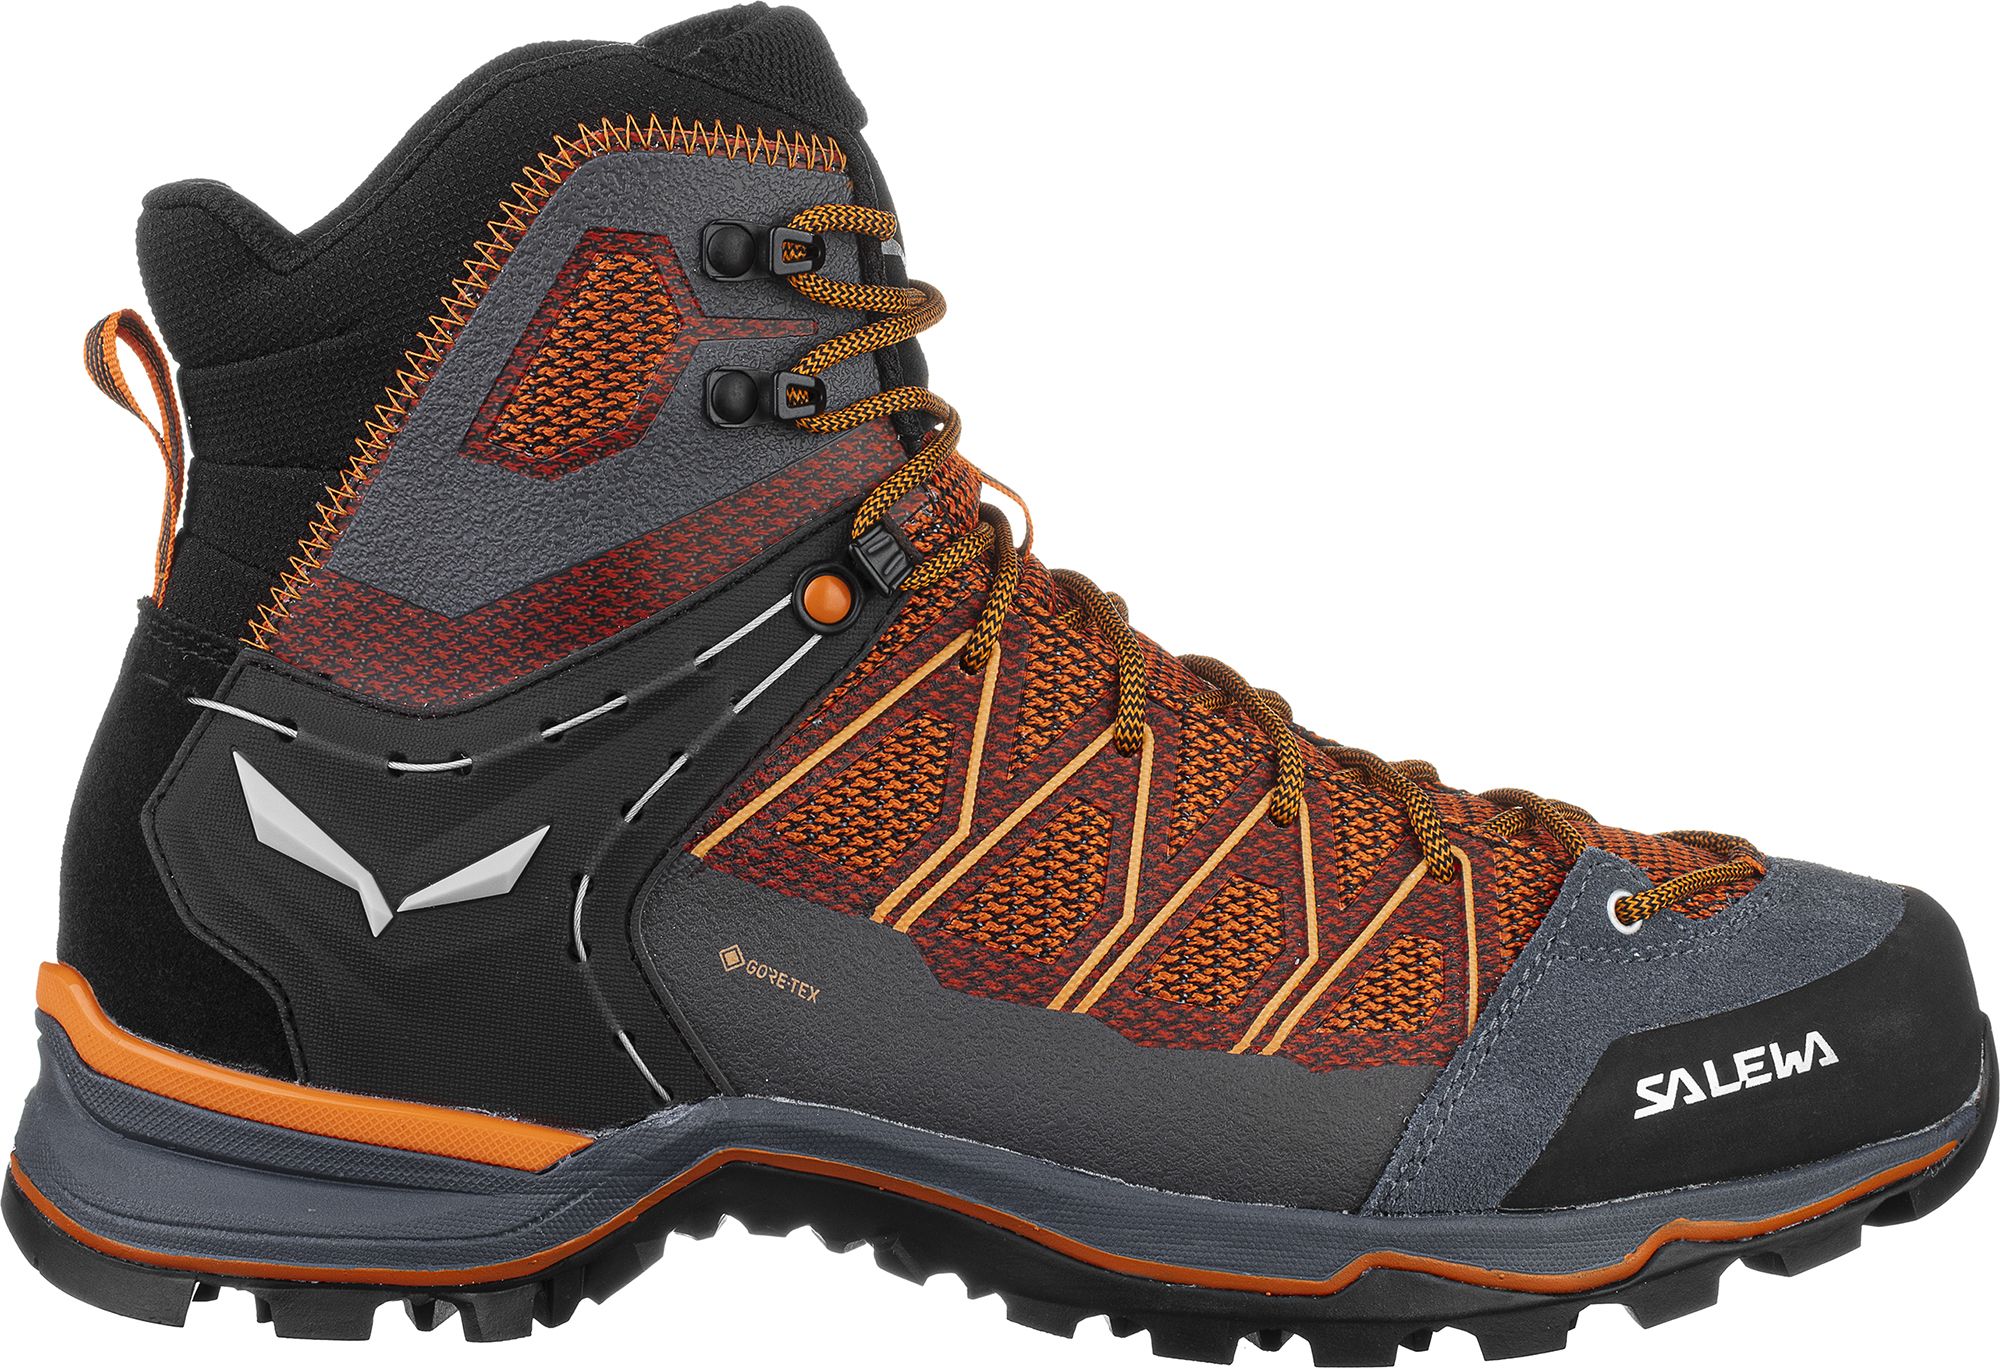 Photos - Trekking Shoes Salewa Men's Mountain Trainer Lite Mid GORE-TEX Hiking Boots, Size 11.5, B 